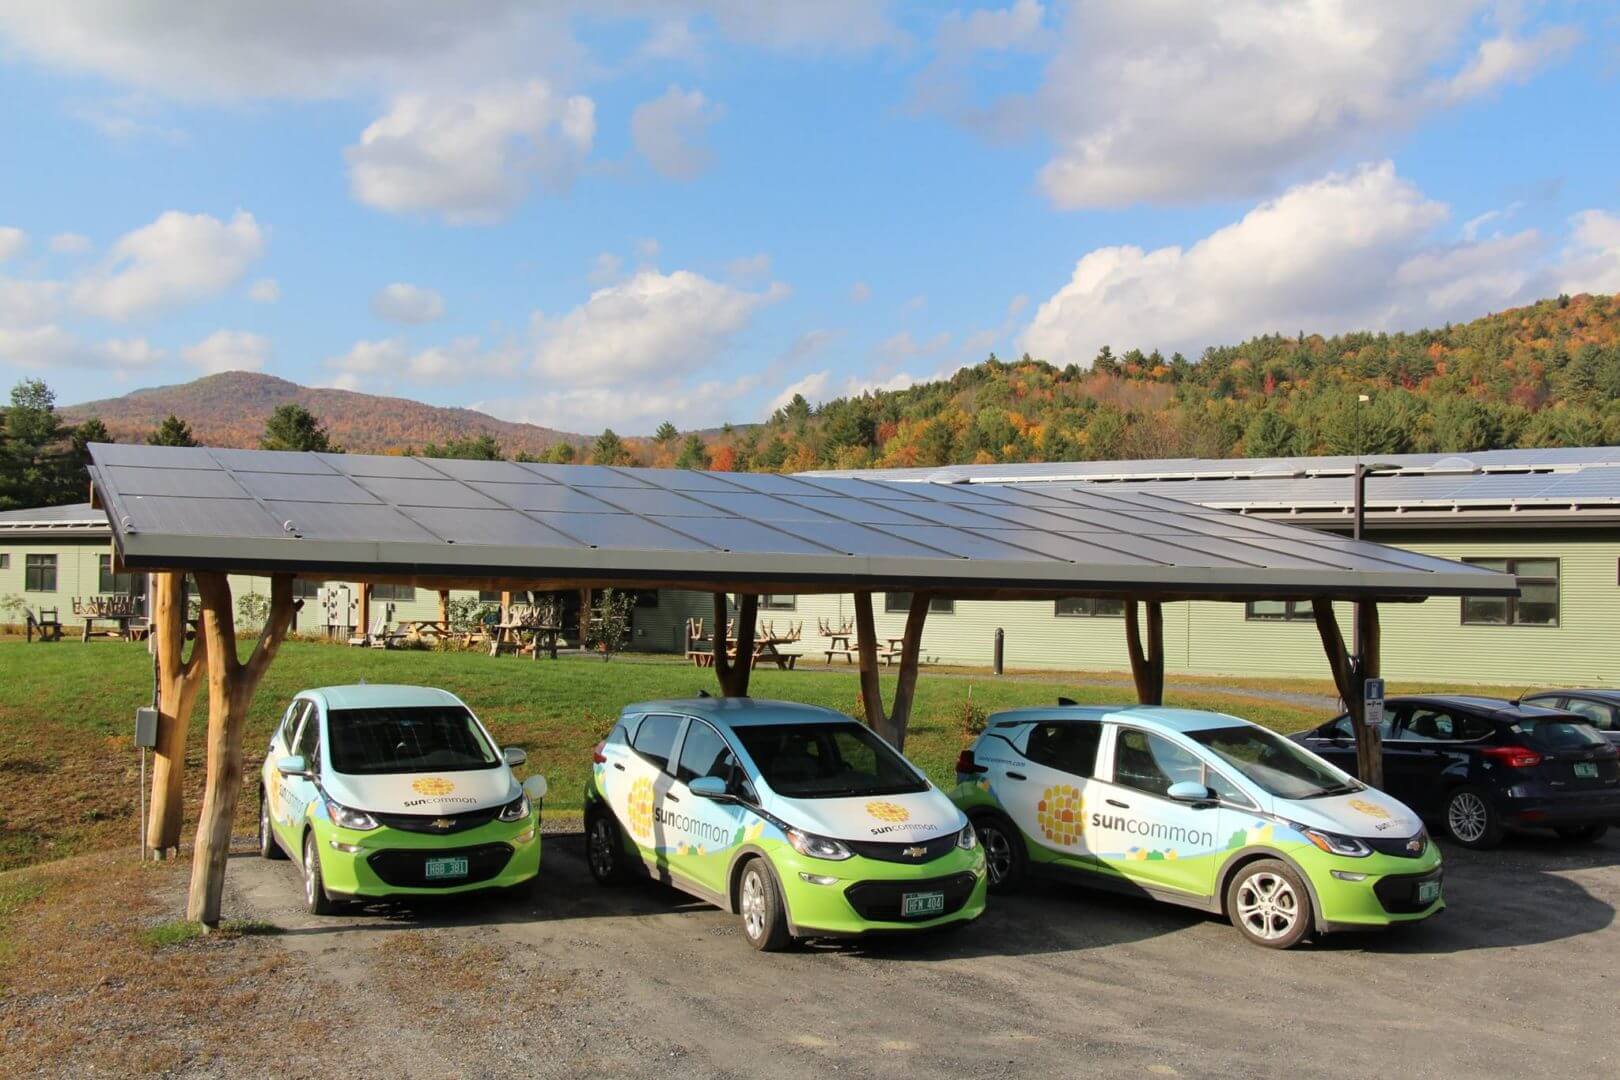 photo of suncommon fleet of cars under solar paneled car ports